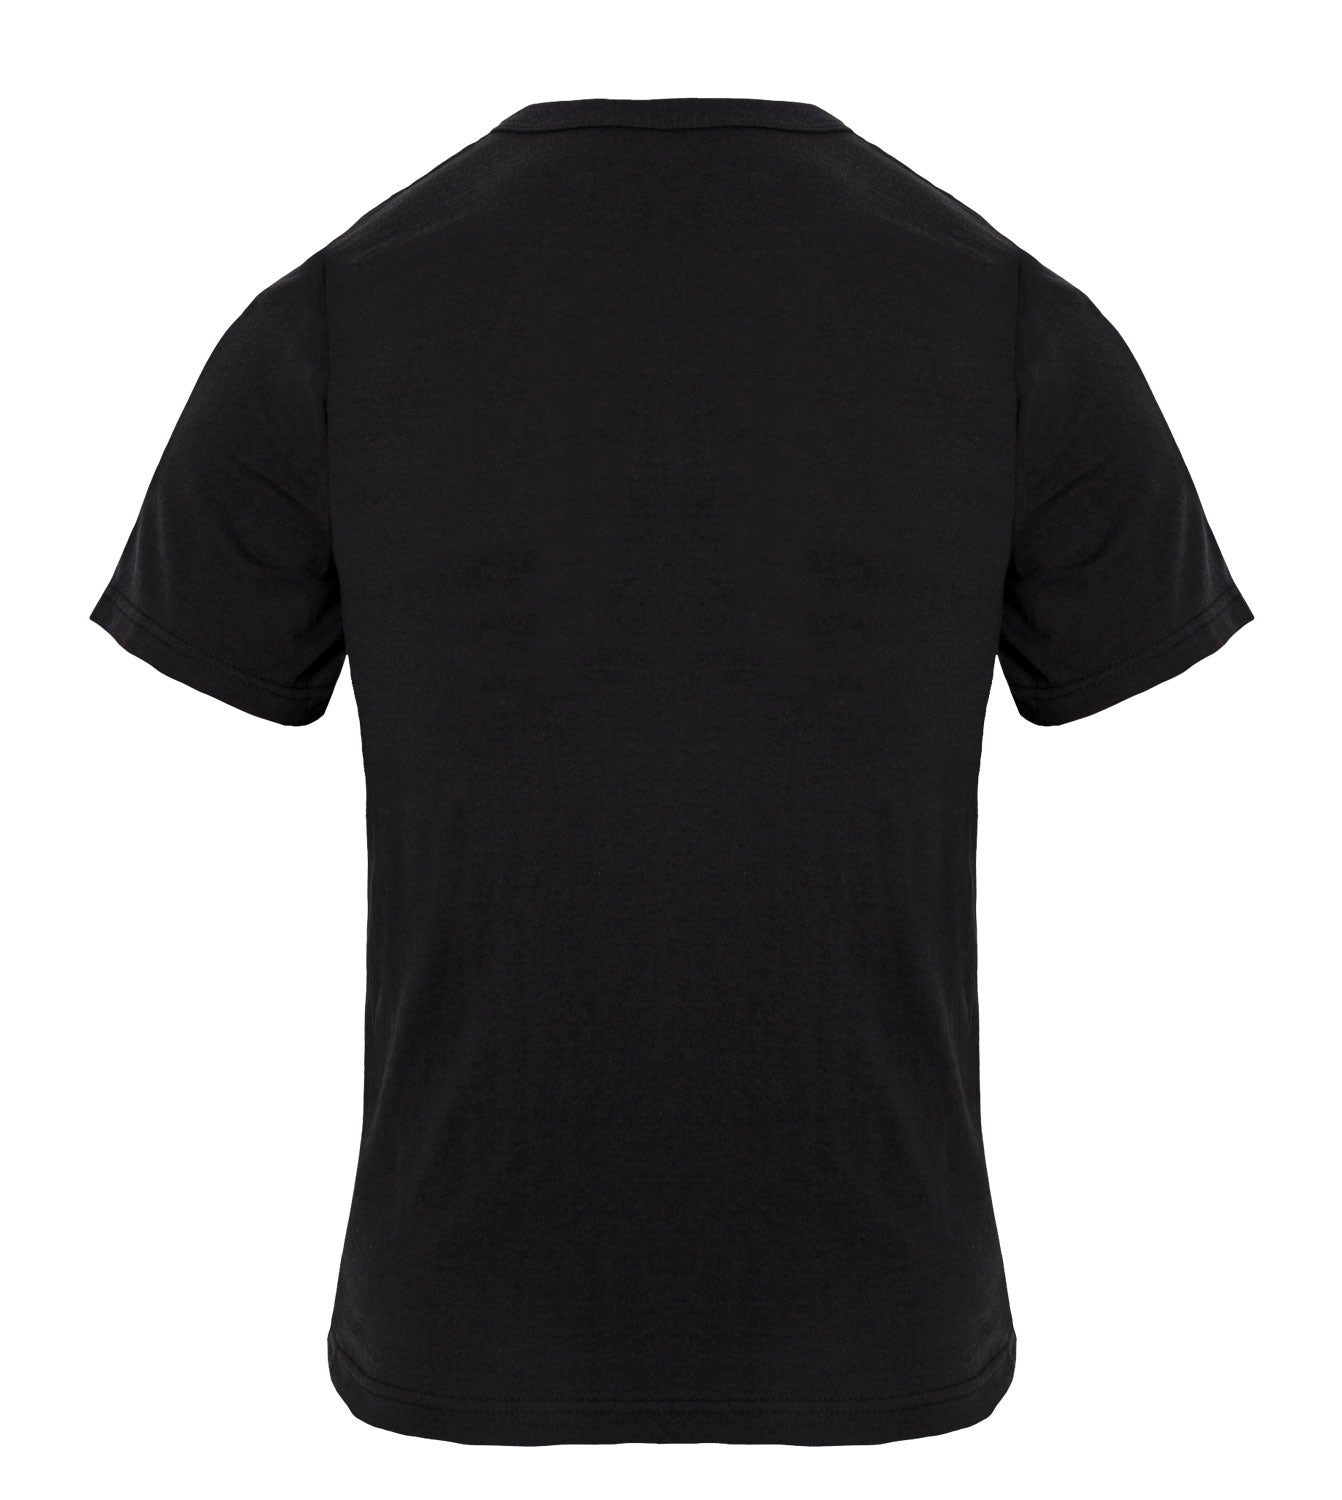 Rothco Army T-Shirt - Tactical Choice Plus